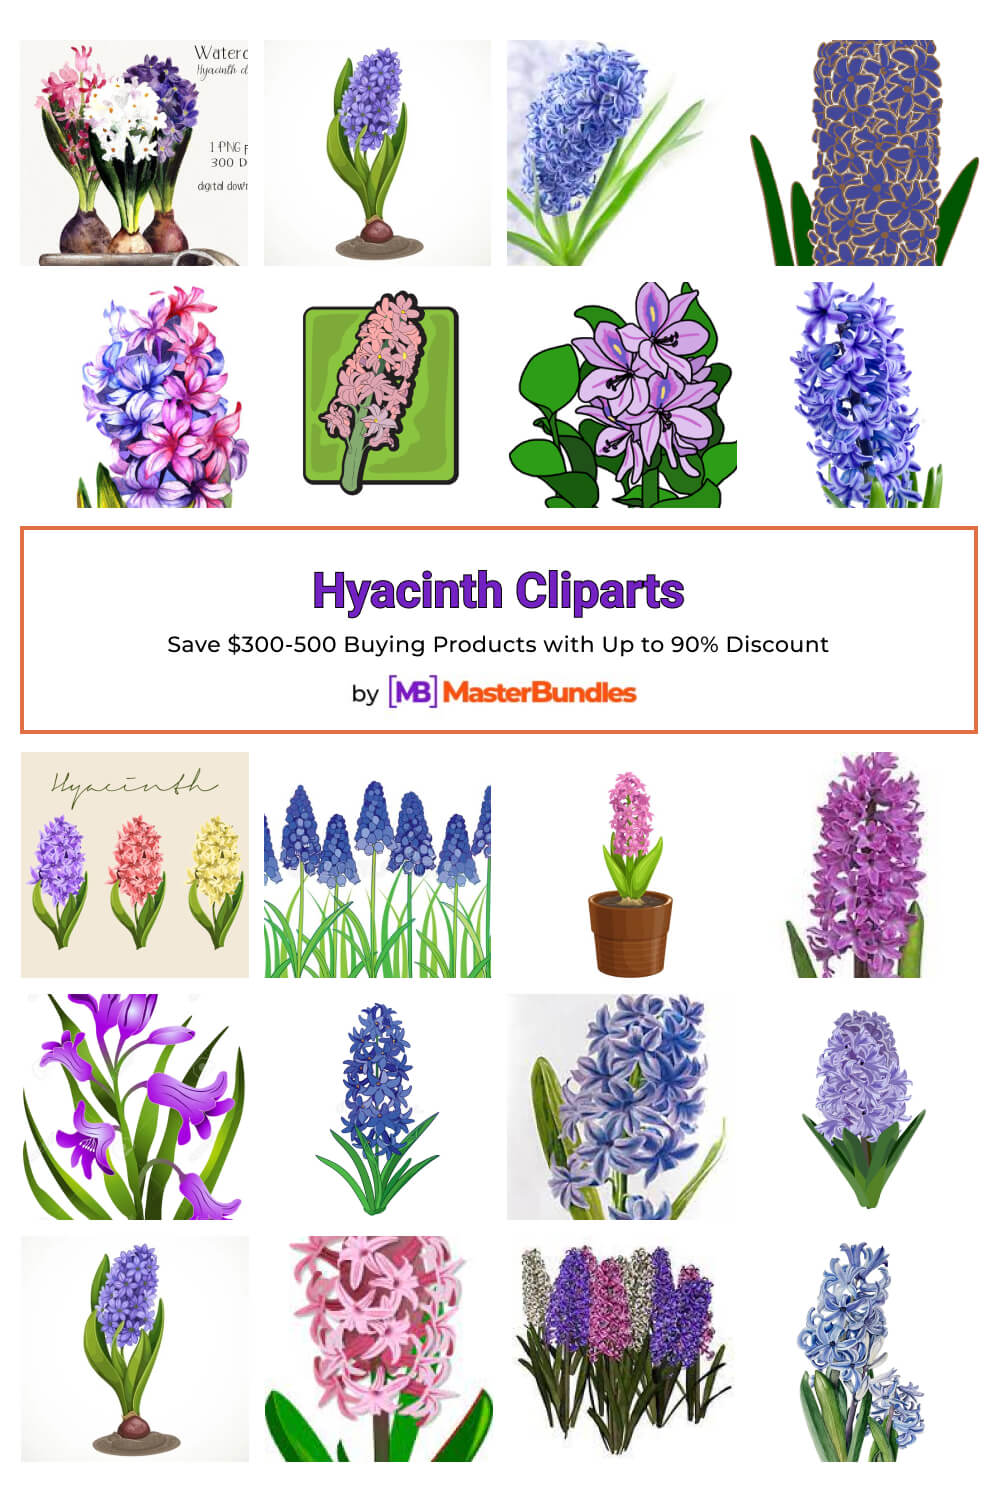 hyacinth cliparts pinterest image.